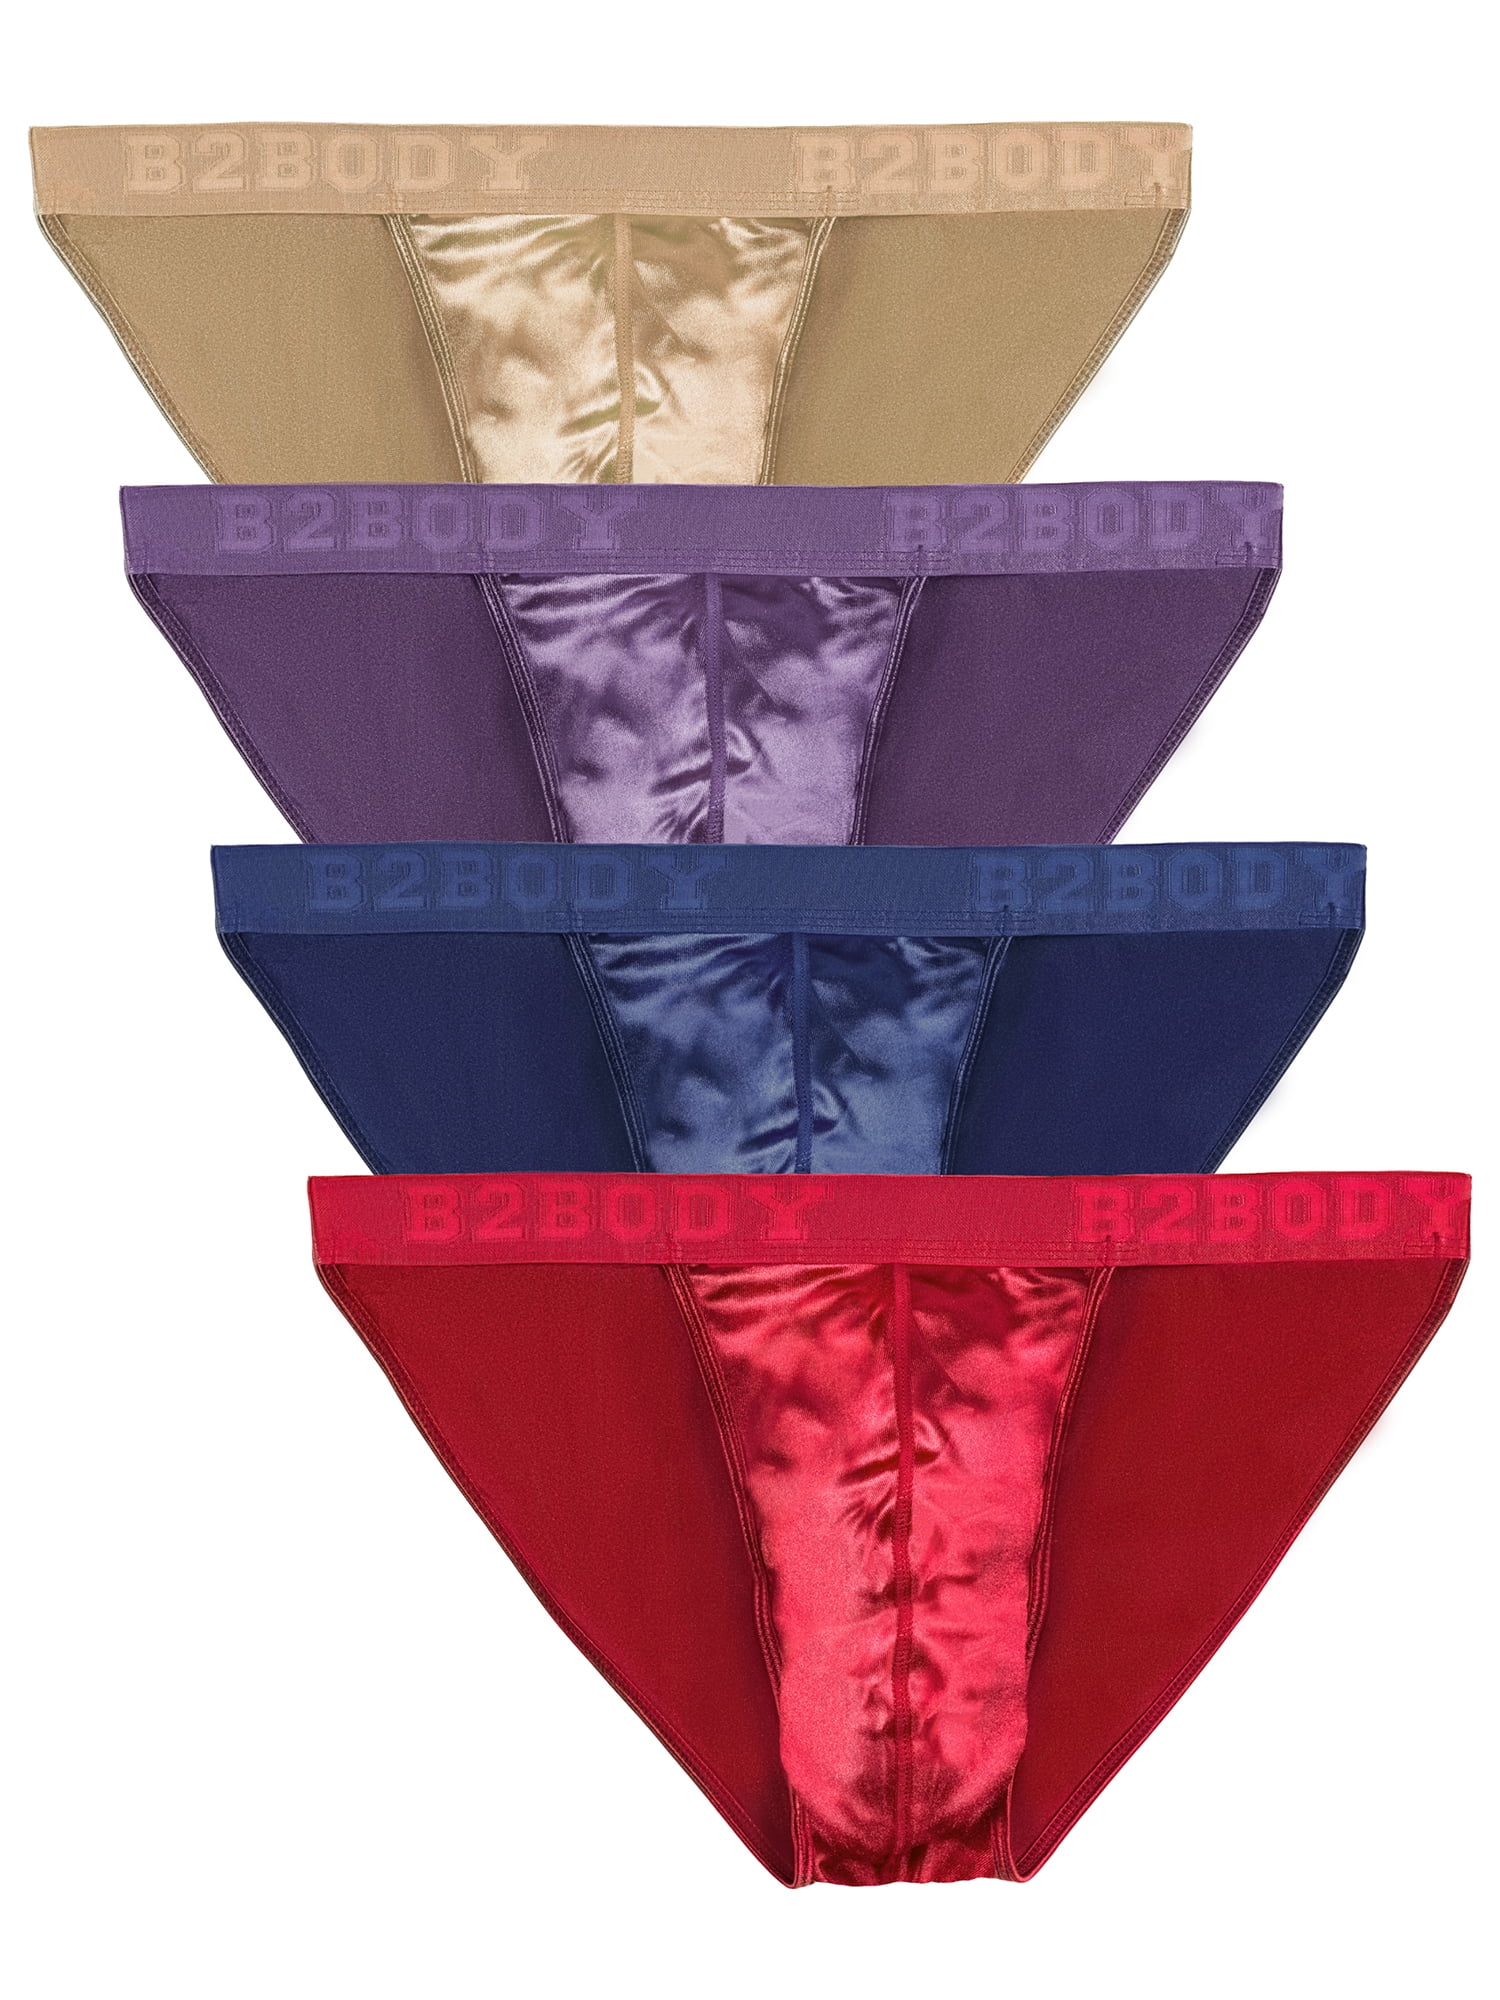 YONGHS Men's Silky Satin Boxers Shorts Underwear Sports Panties Swimwear  M-3XL A Heart Black XL 